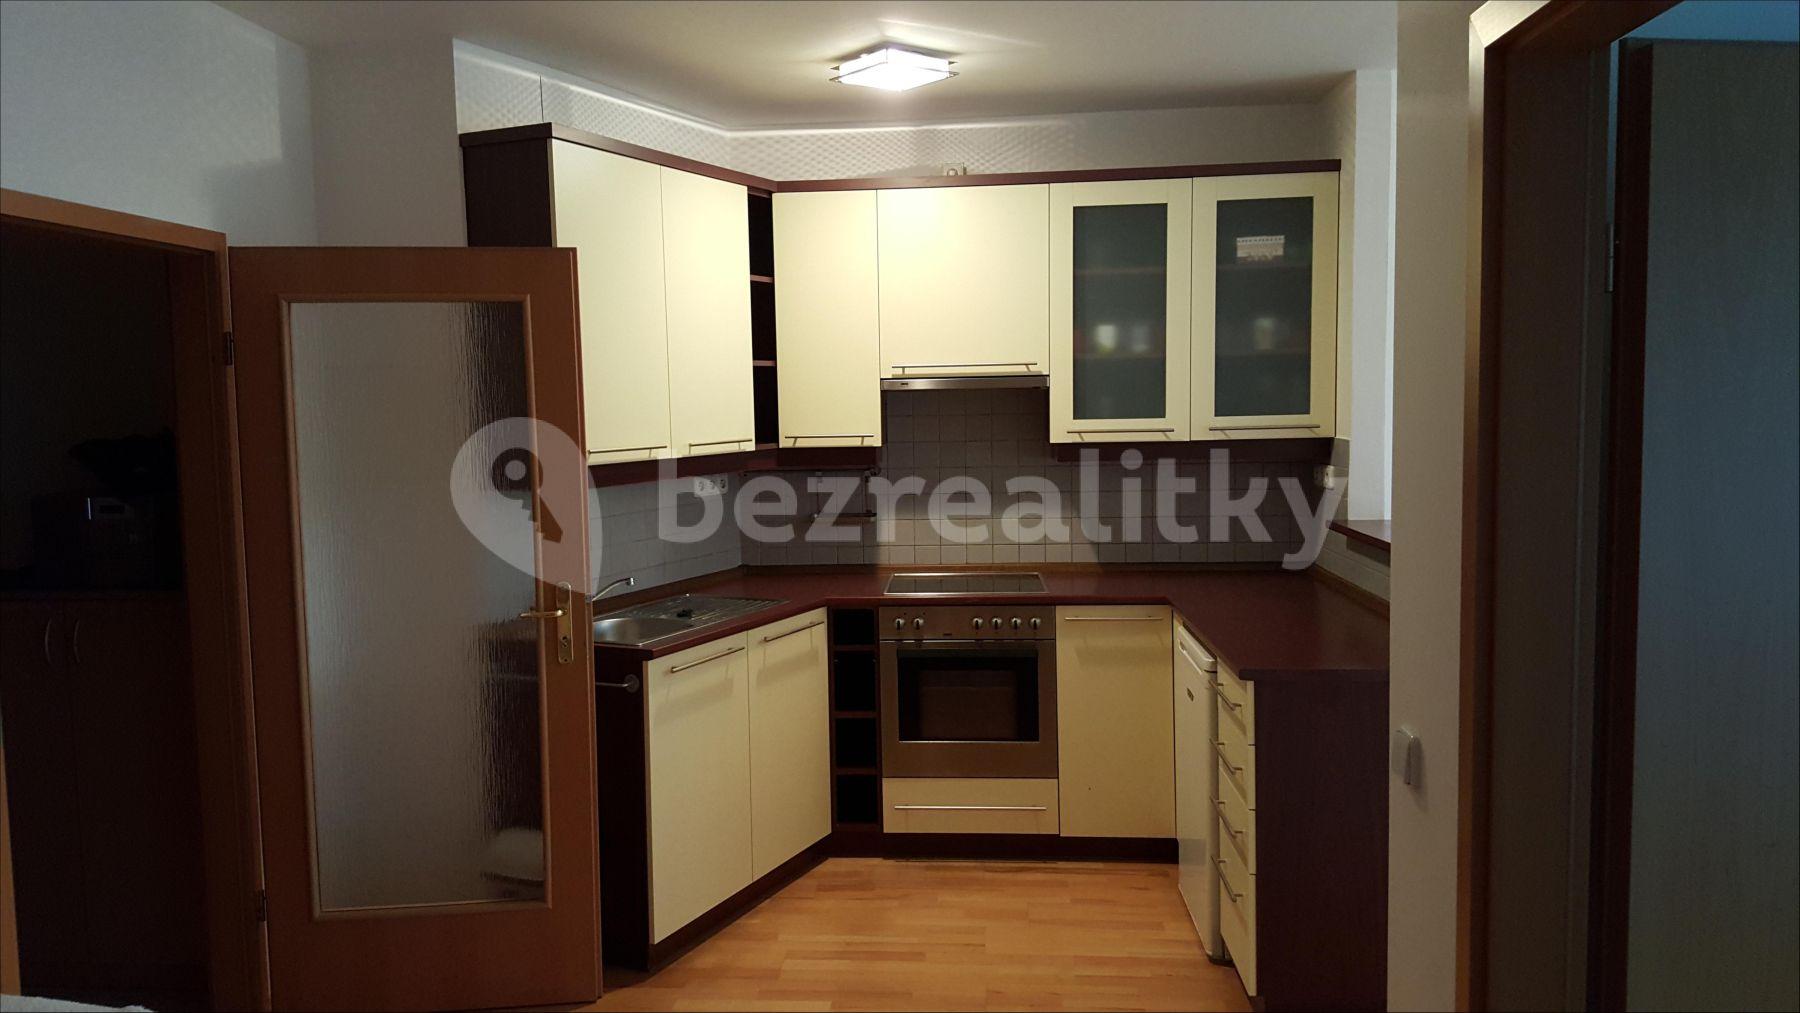 1 bedroom with open-plan kitchen flat to rent, 63 m², Jeremenkova, Prague, Prague